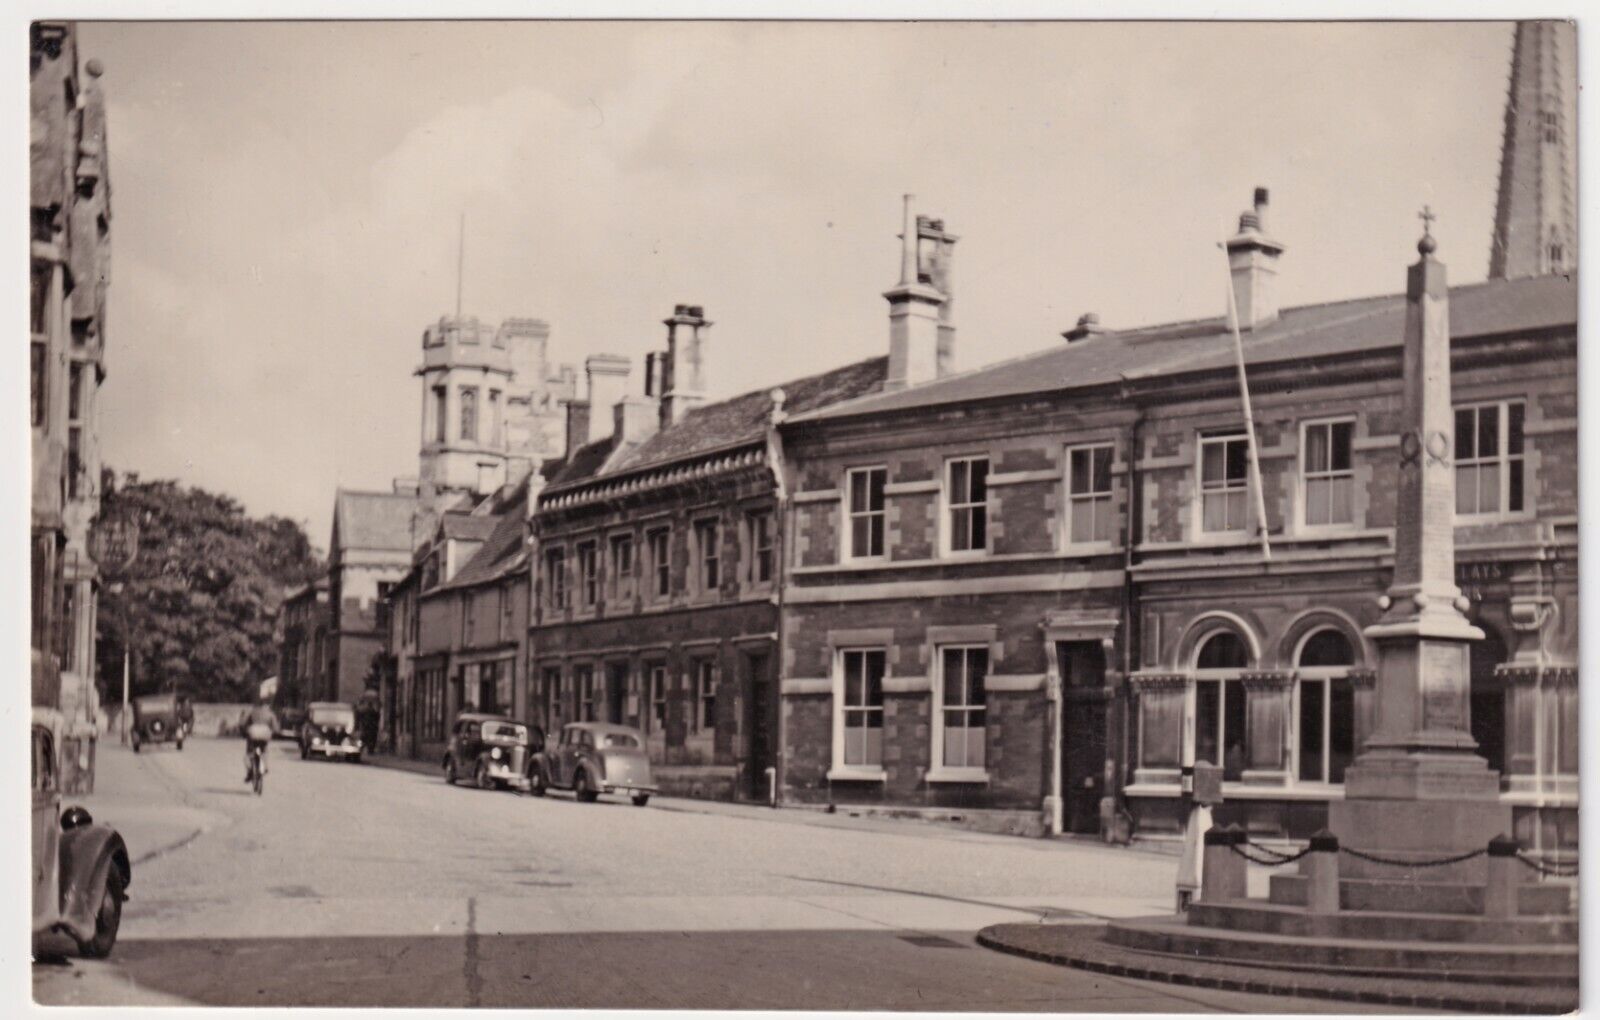 UK NORTHAMPTON OUNDLE TOWN CENTER AND CENTOPATH REAL PHOTO POSTCARD CIRCA 1949